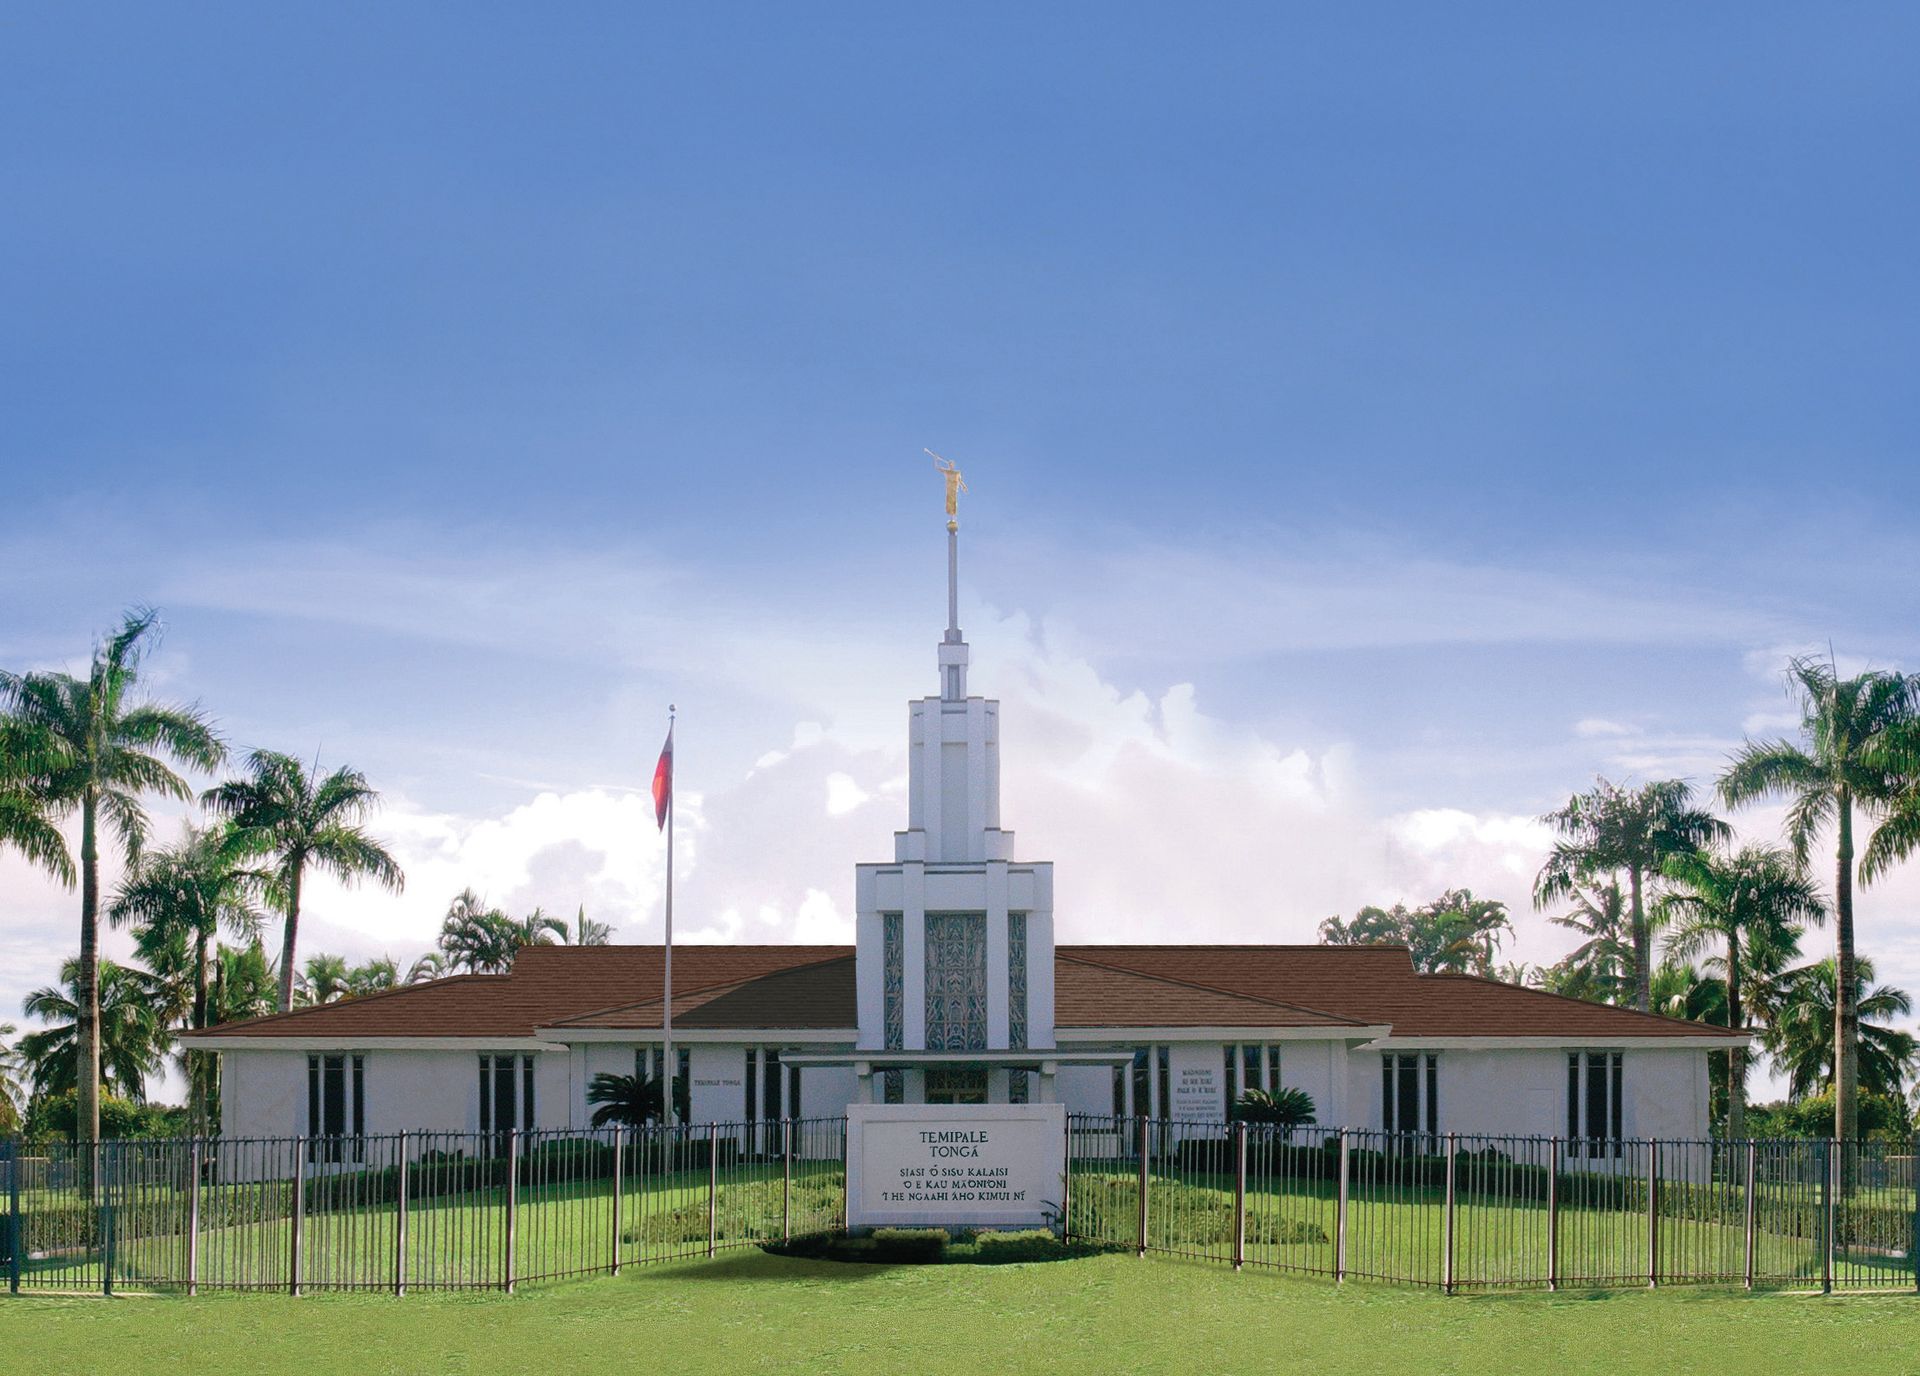 The entire Nuku‘alofa Tonga Temple, including the name sign and scenery.